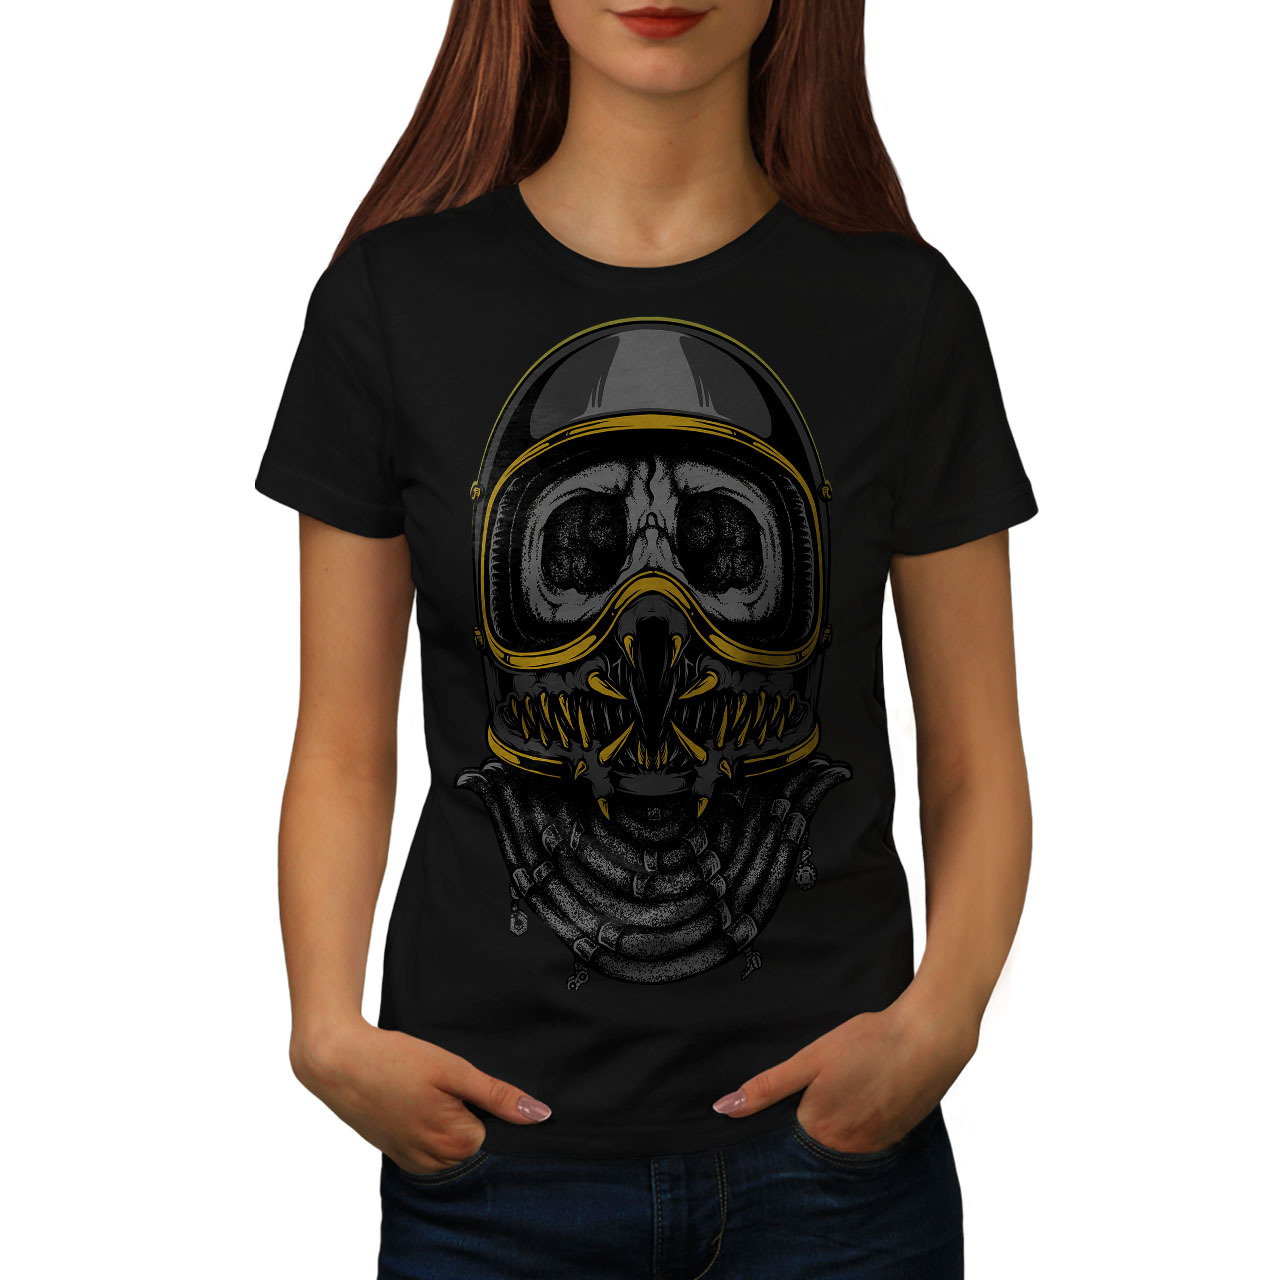 Scary Head Evil Horror Shirt  Women T-shirt - $12.99